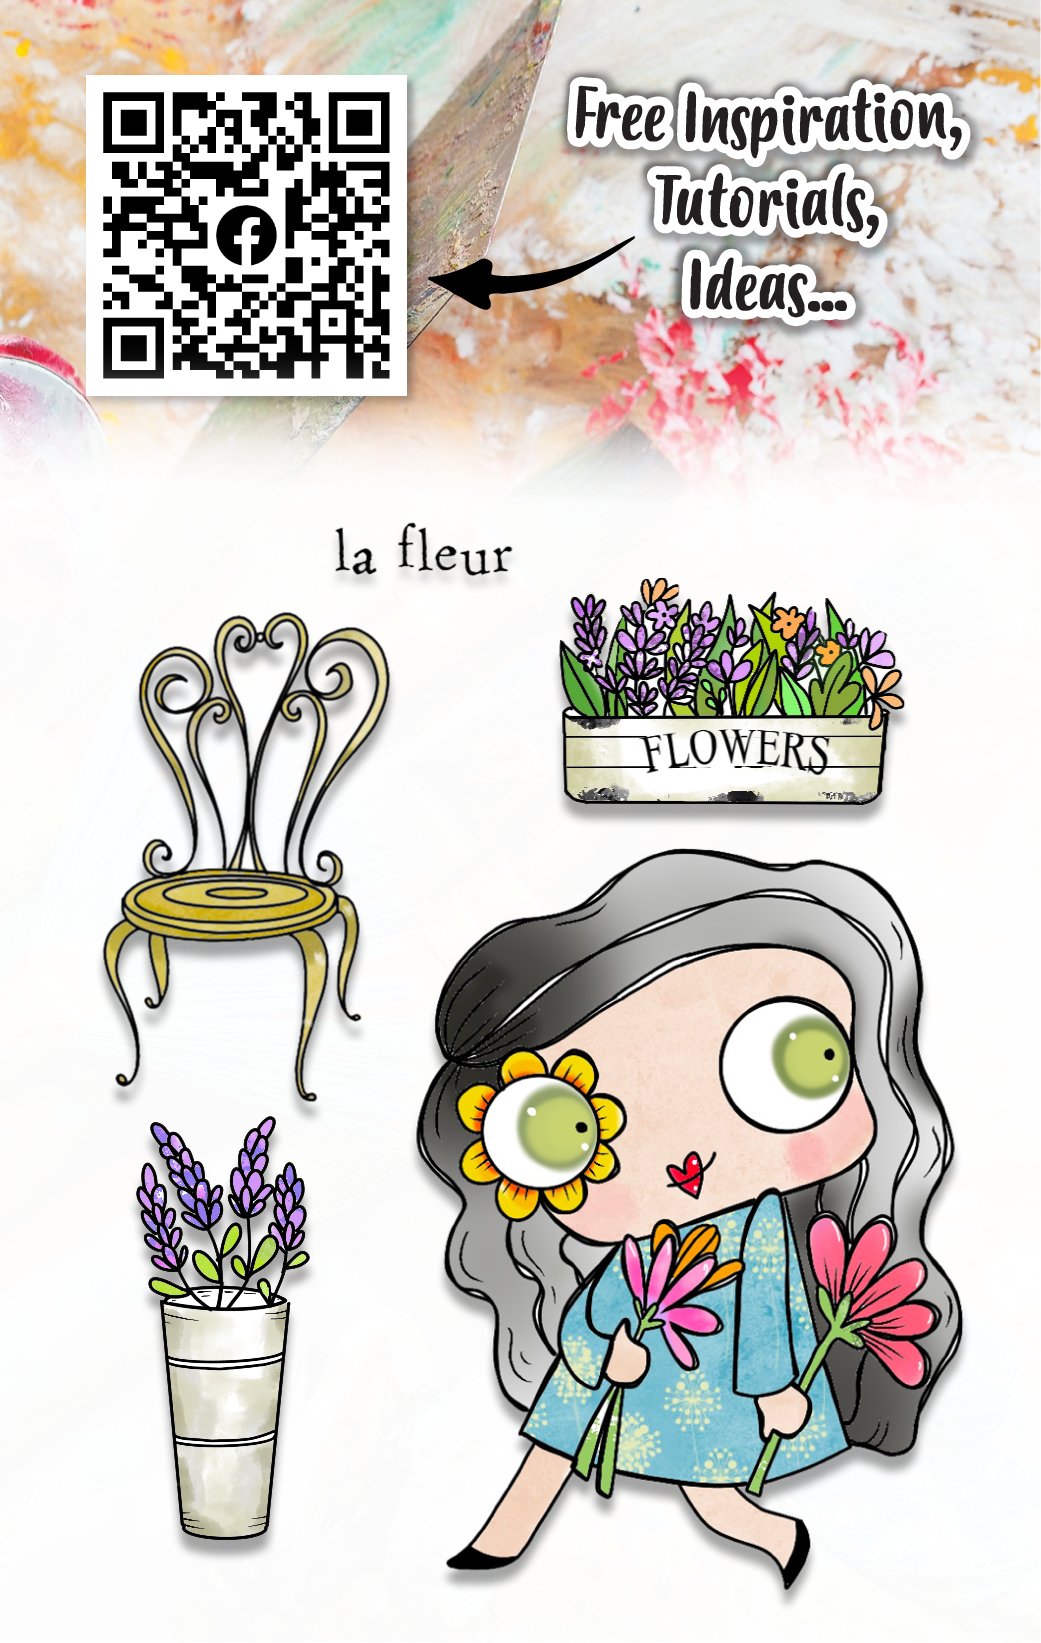 AALL and Create - A7 Stamp Set - La Fleur